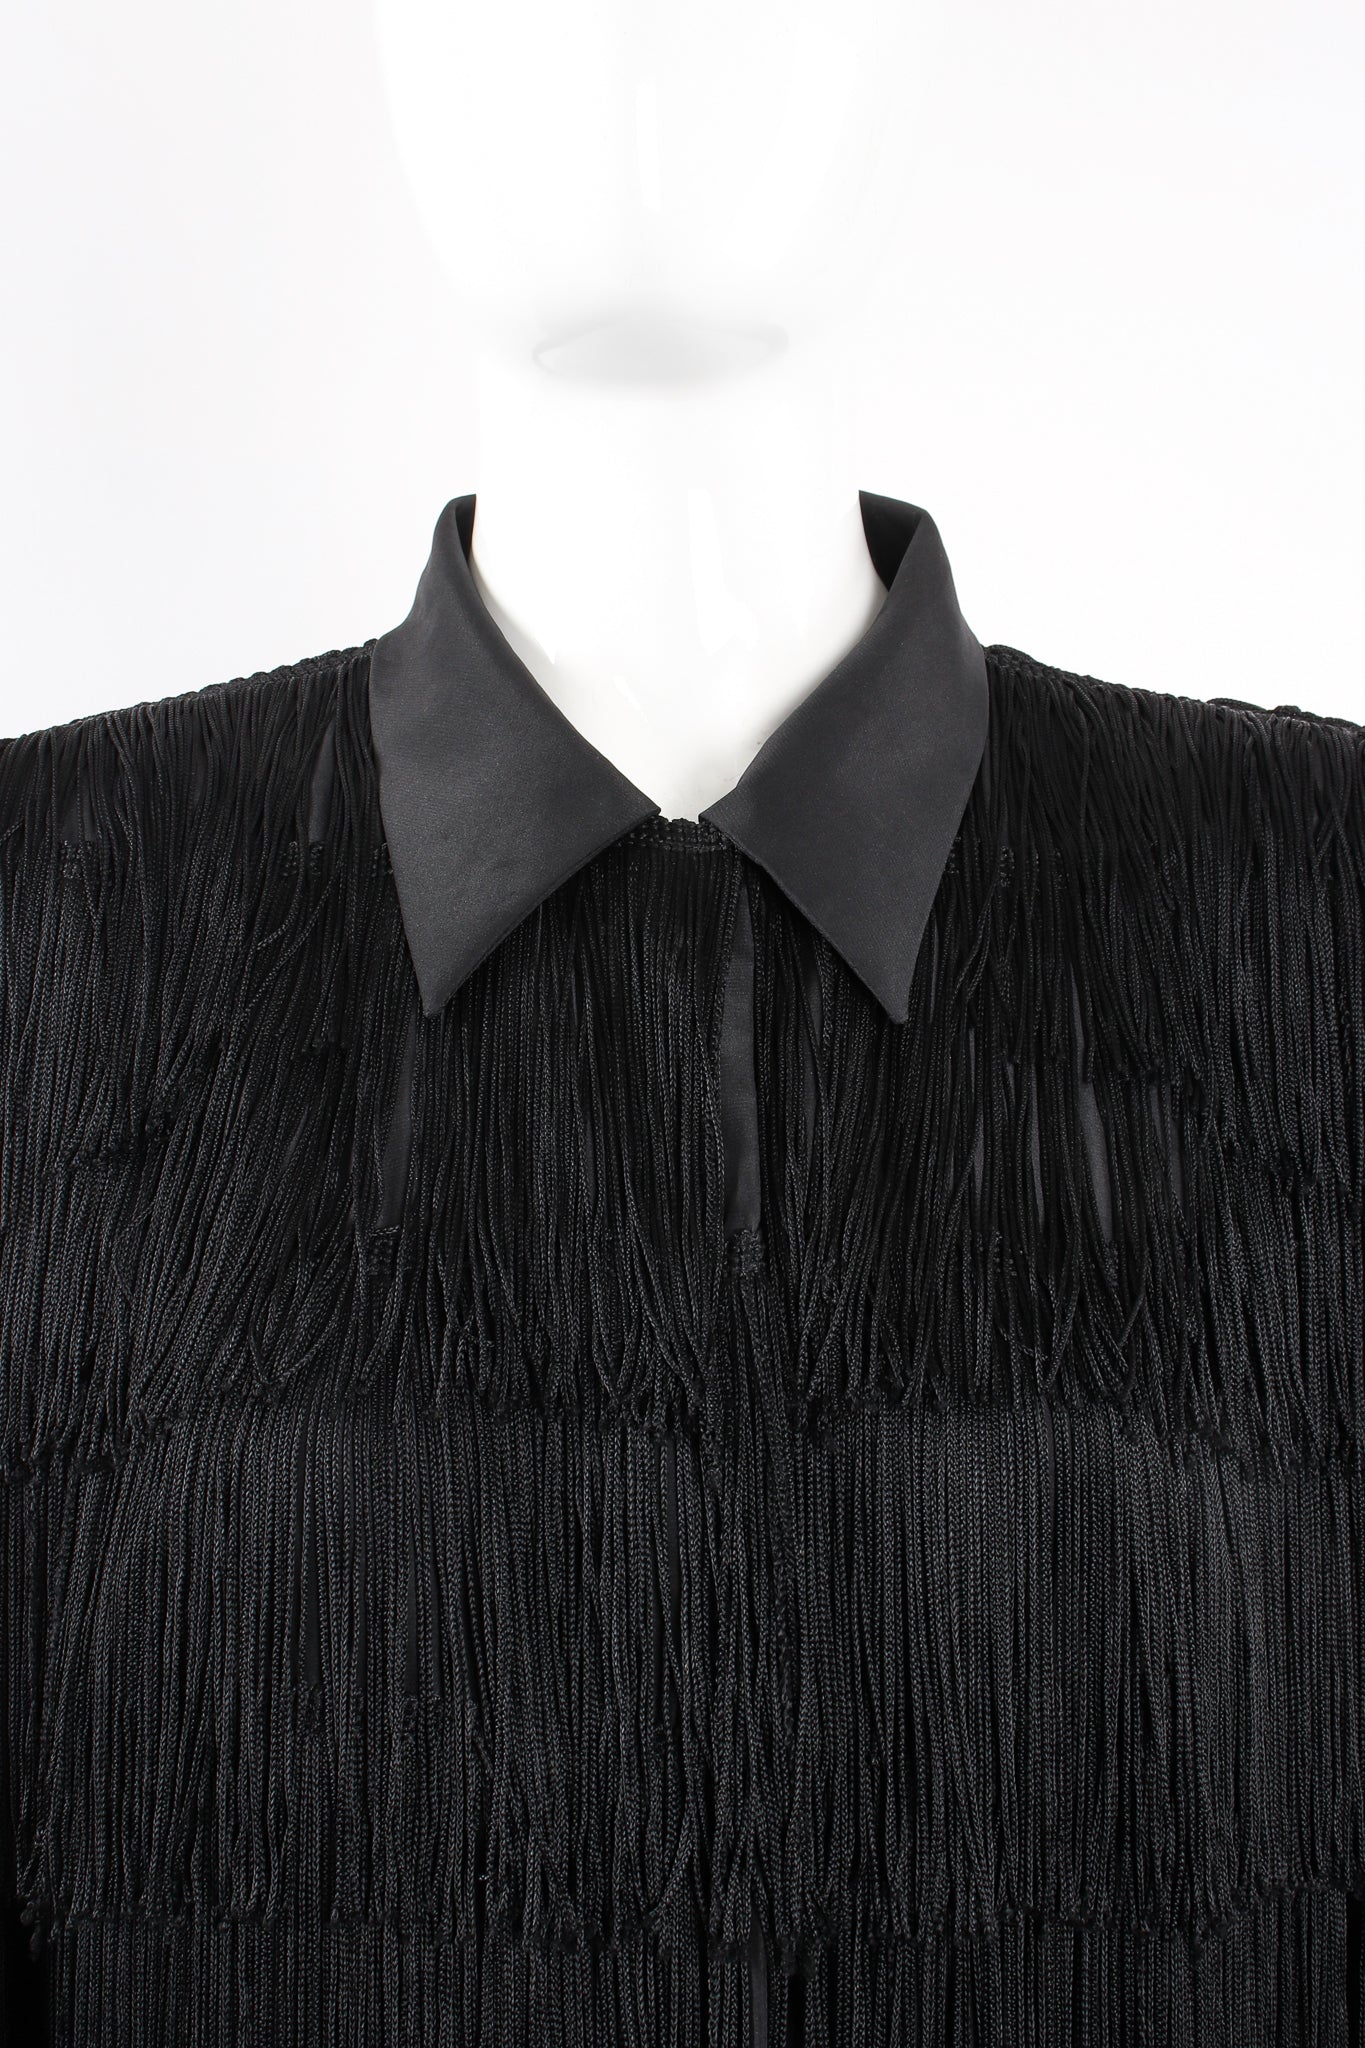 Vintage OMO Norma Kamali Fringed Shirt Dress Jacket on Mannequin collar at Recess Los Angeles